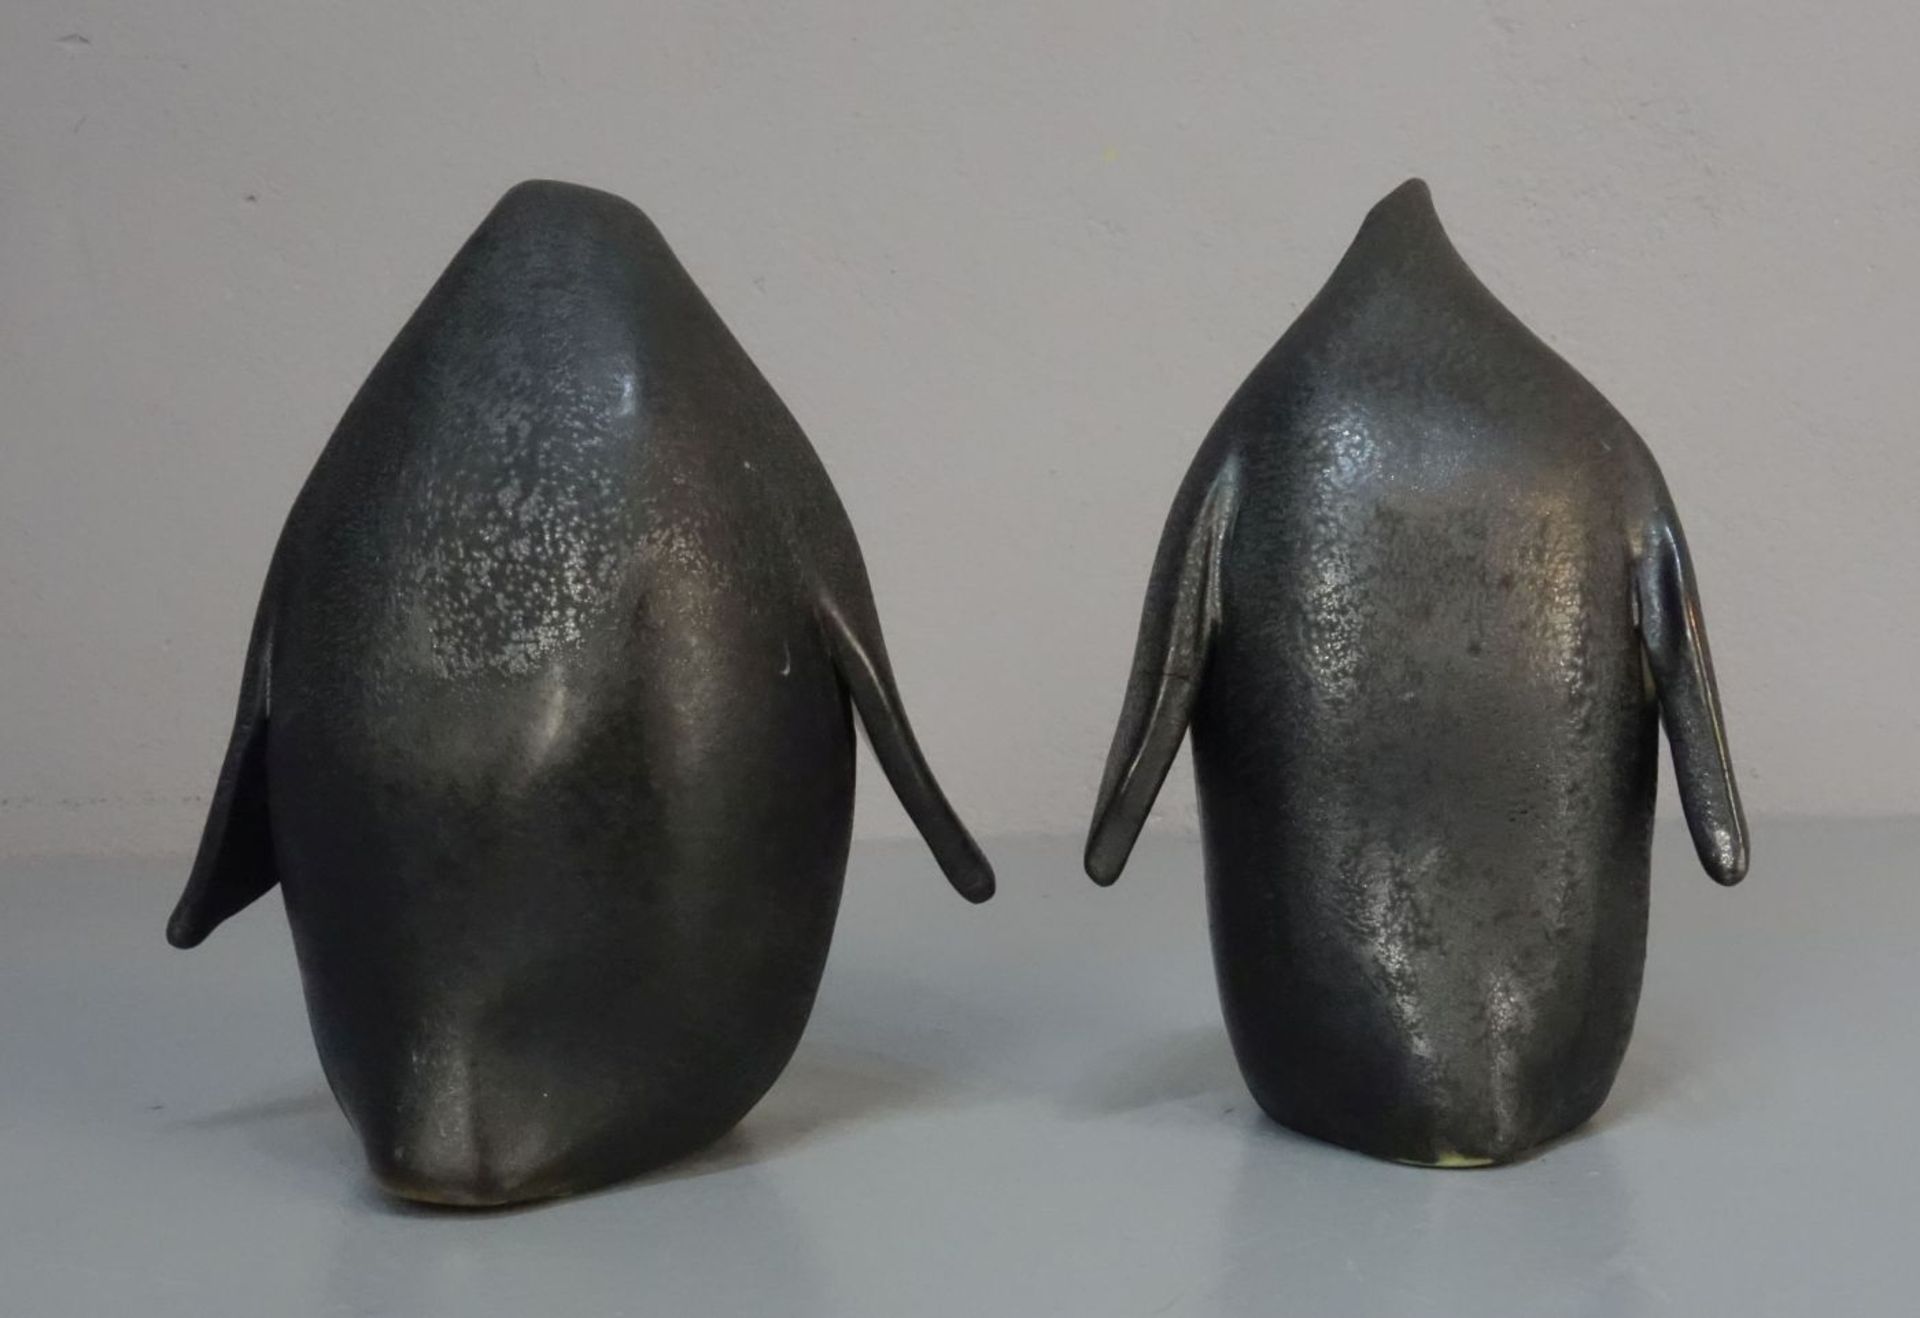 KERAMIKFIGUREN: "Pinguine" / ceramic penguins, Studiokeramik, heller Scherben, weiß, schwarz und - Bild 4 aus 5